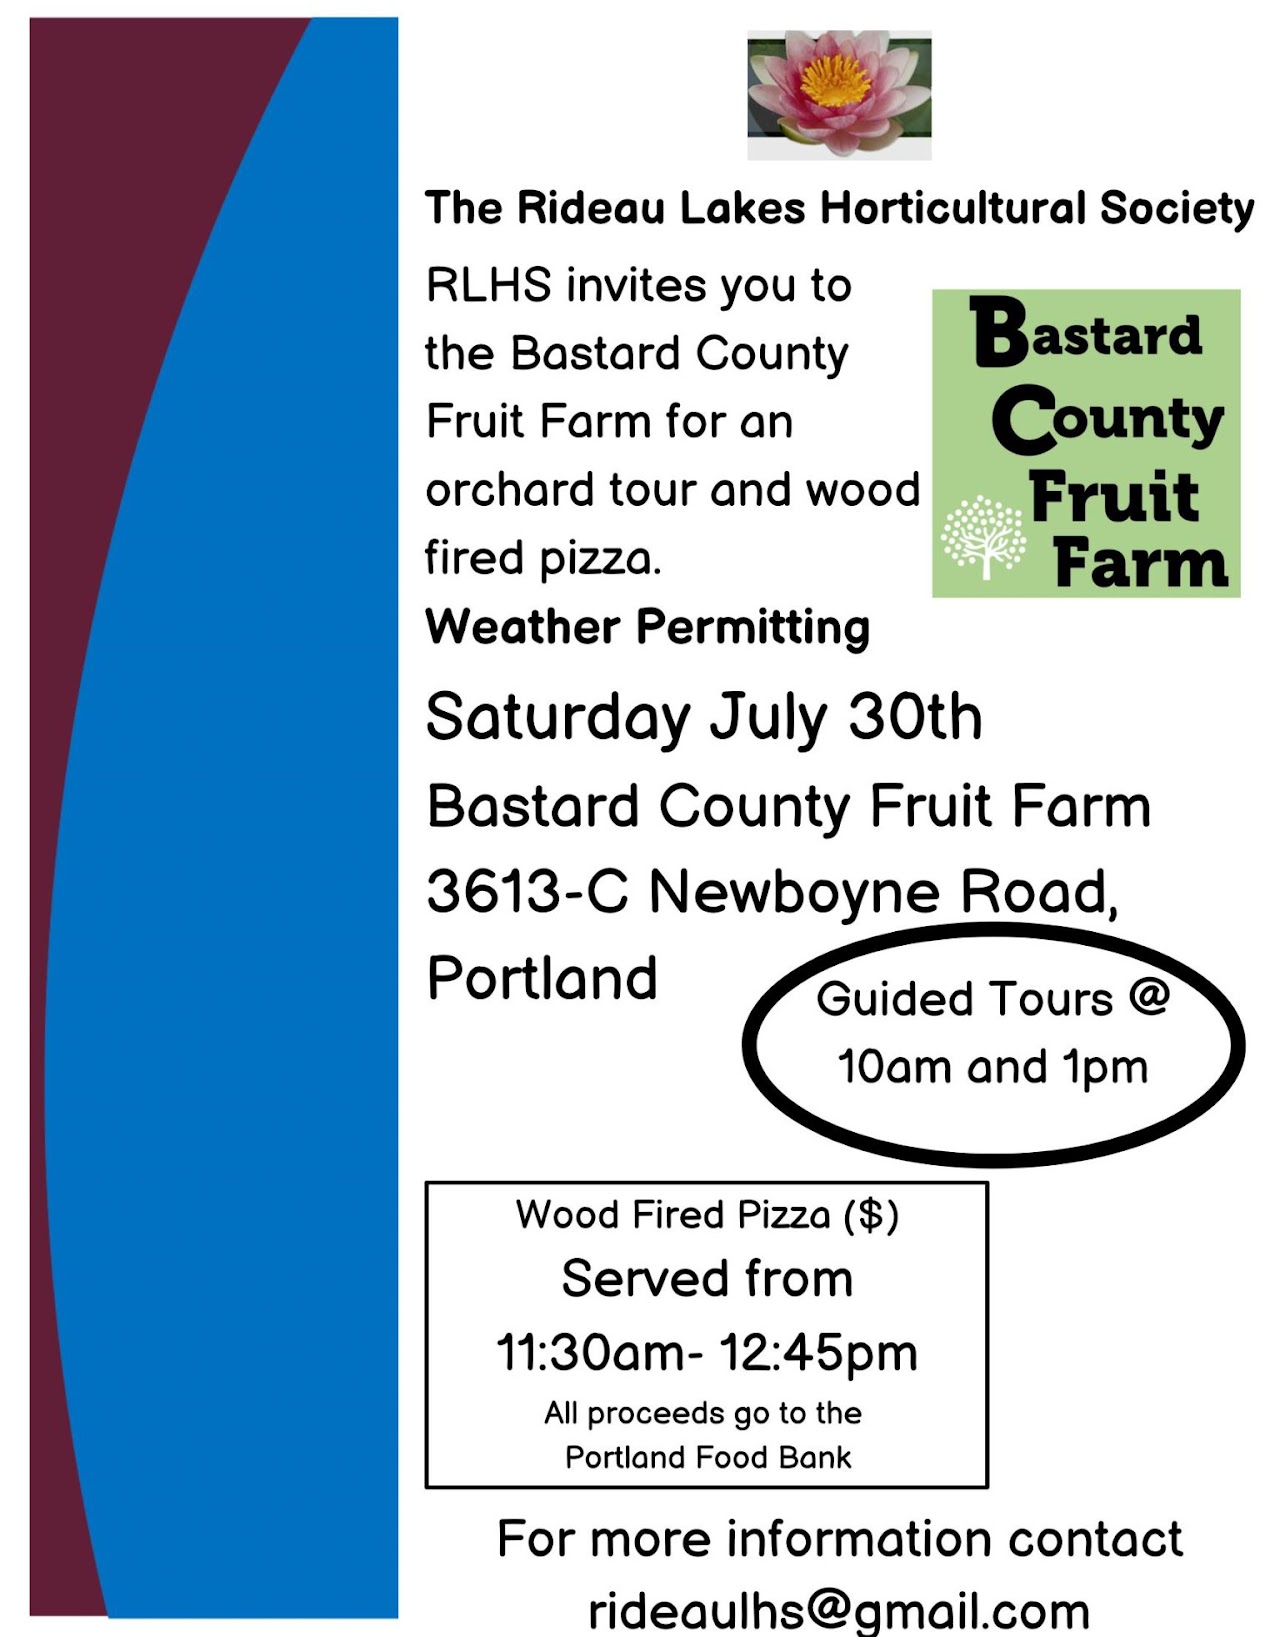 Bastard County Fruit Farm